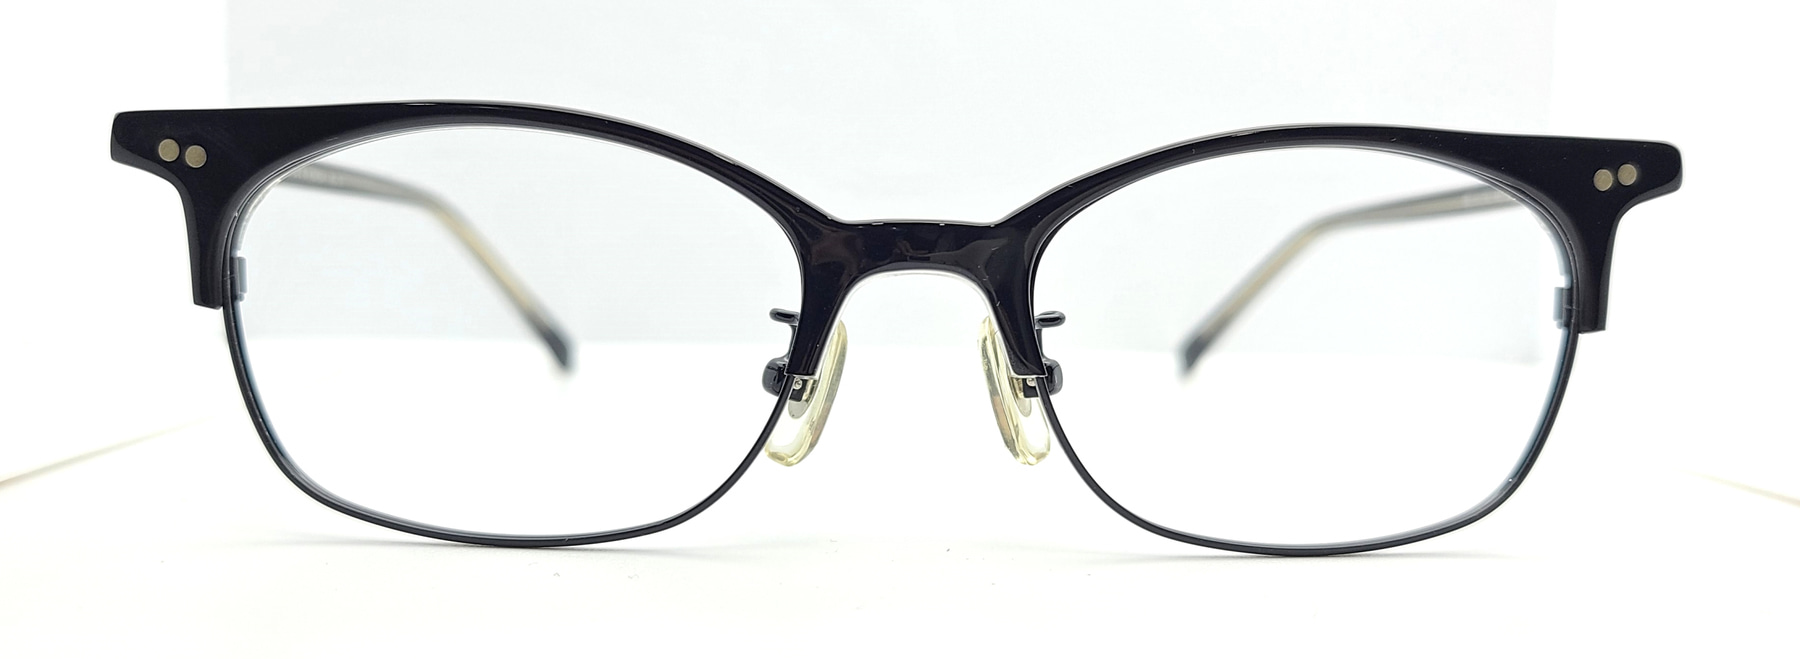 MINIHOUSE M-1176, Korean glasses, sunglasses, eyeglasses, glasses